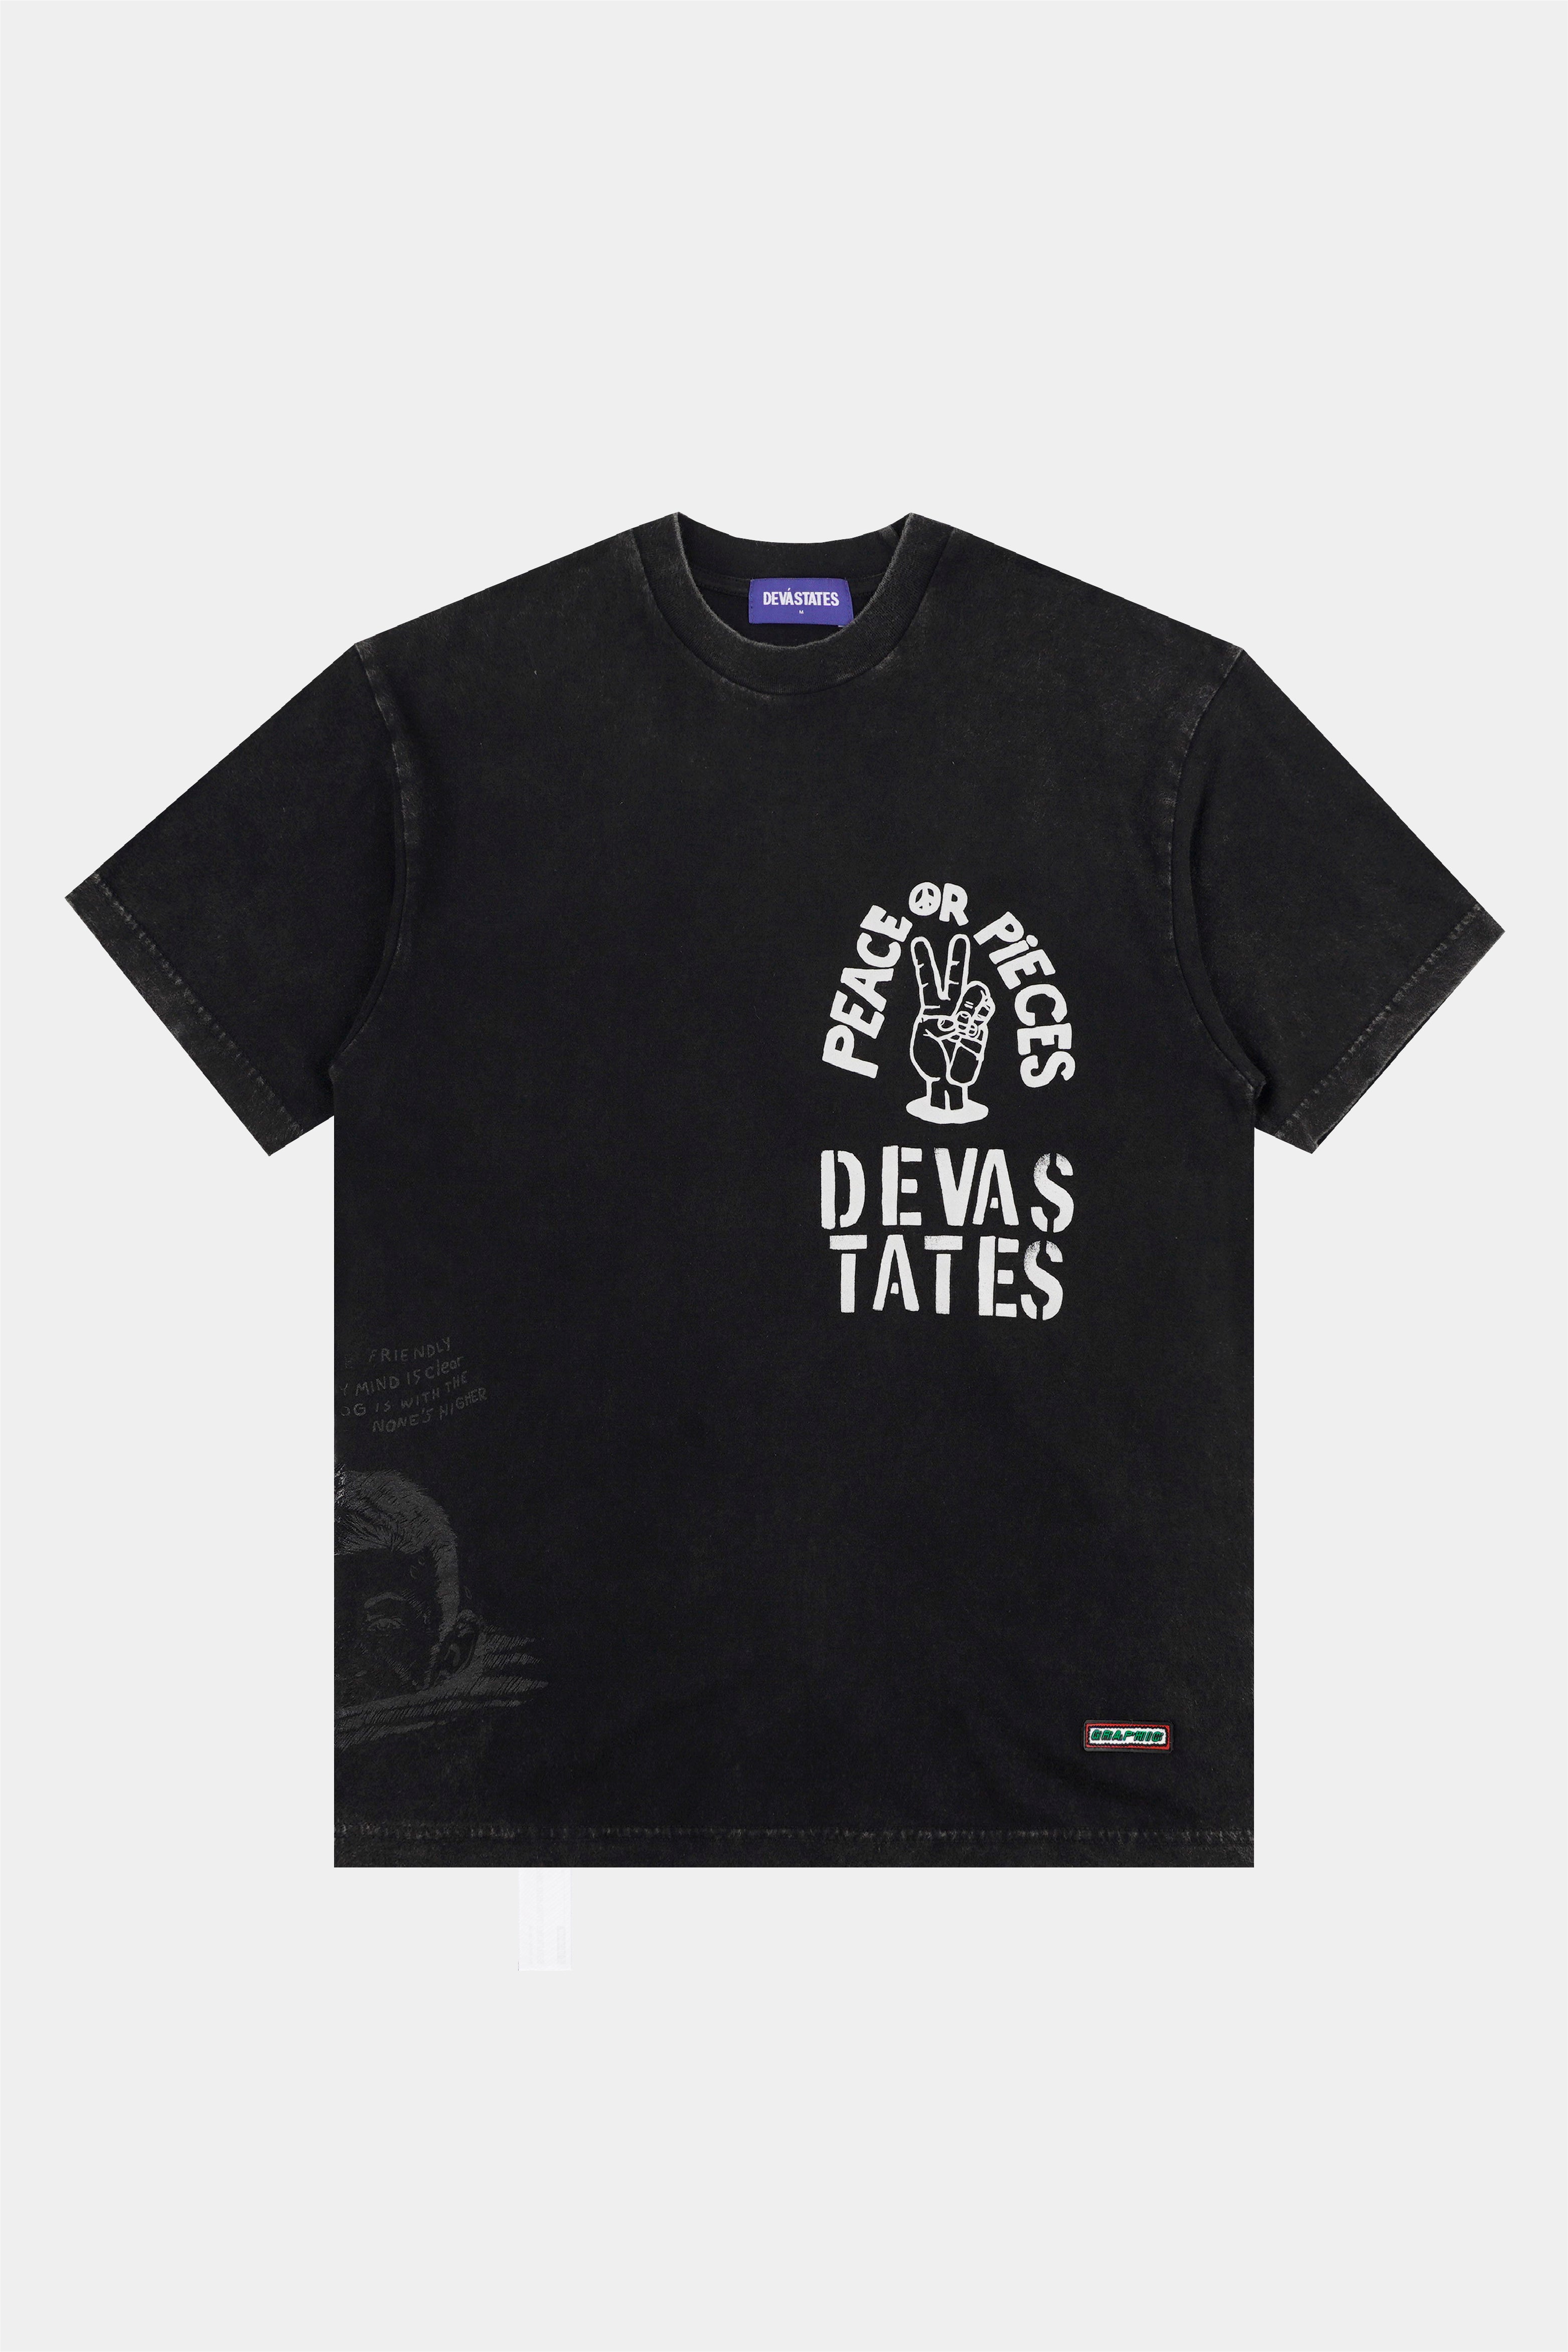 Selectshop FRAME - DEVA STATES Dusty Tee T-Shirts Dubai